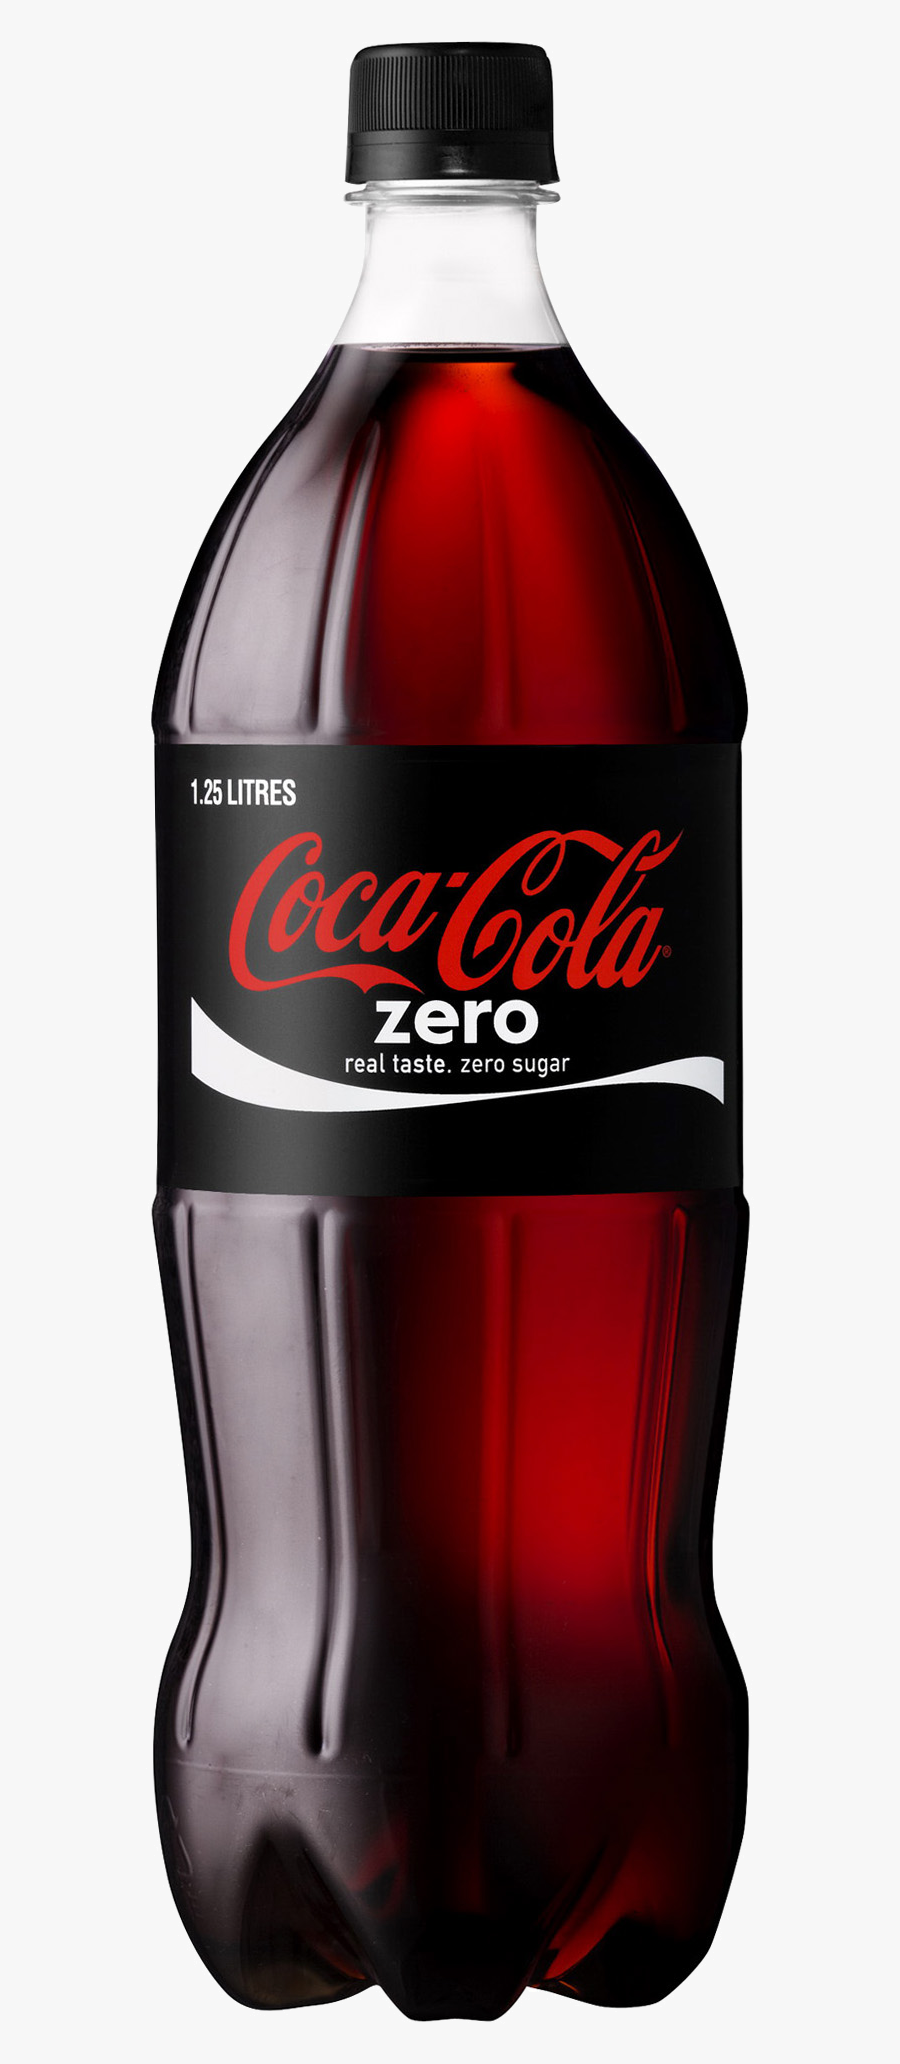 Coca Cola Bottle Png Image Download Free - Coca Cola Bottle Png, Transparent Clipart